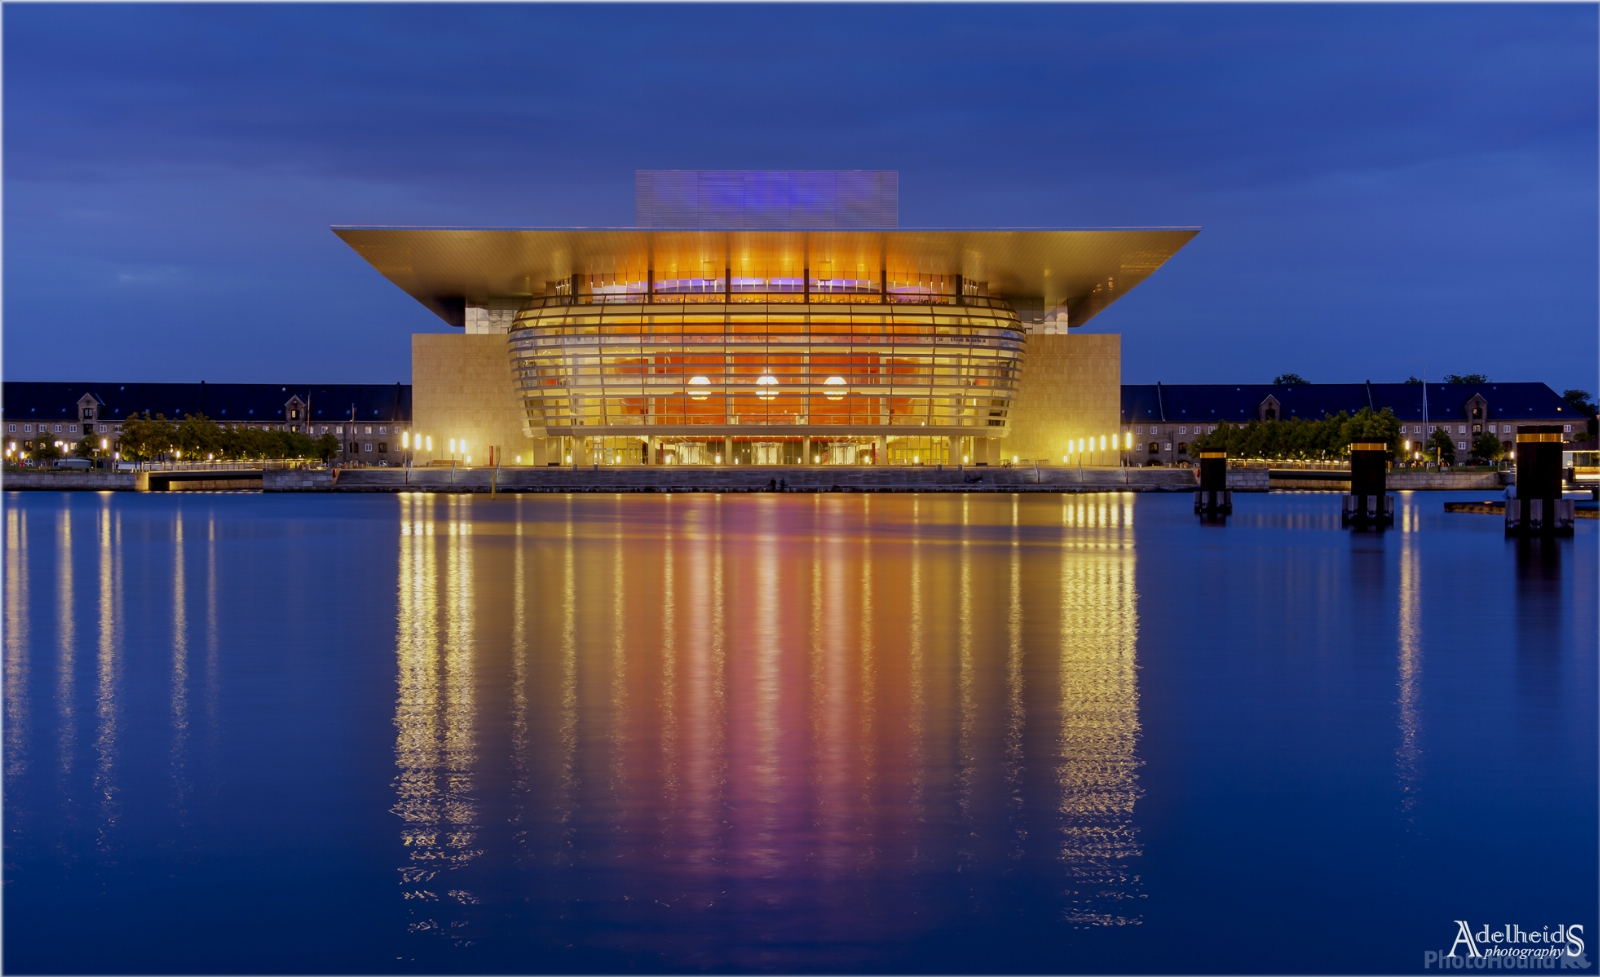 Image of Copenhagen Opera House by Adelheid Smitt